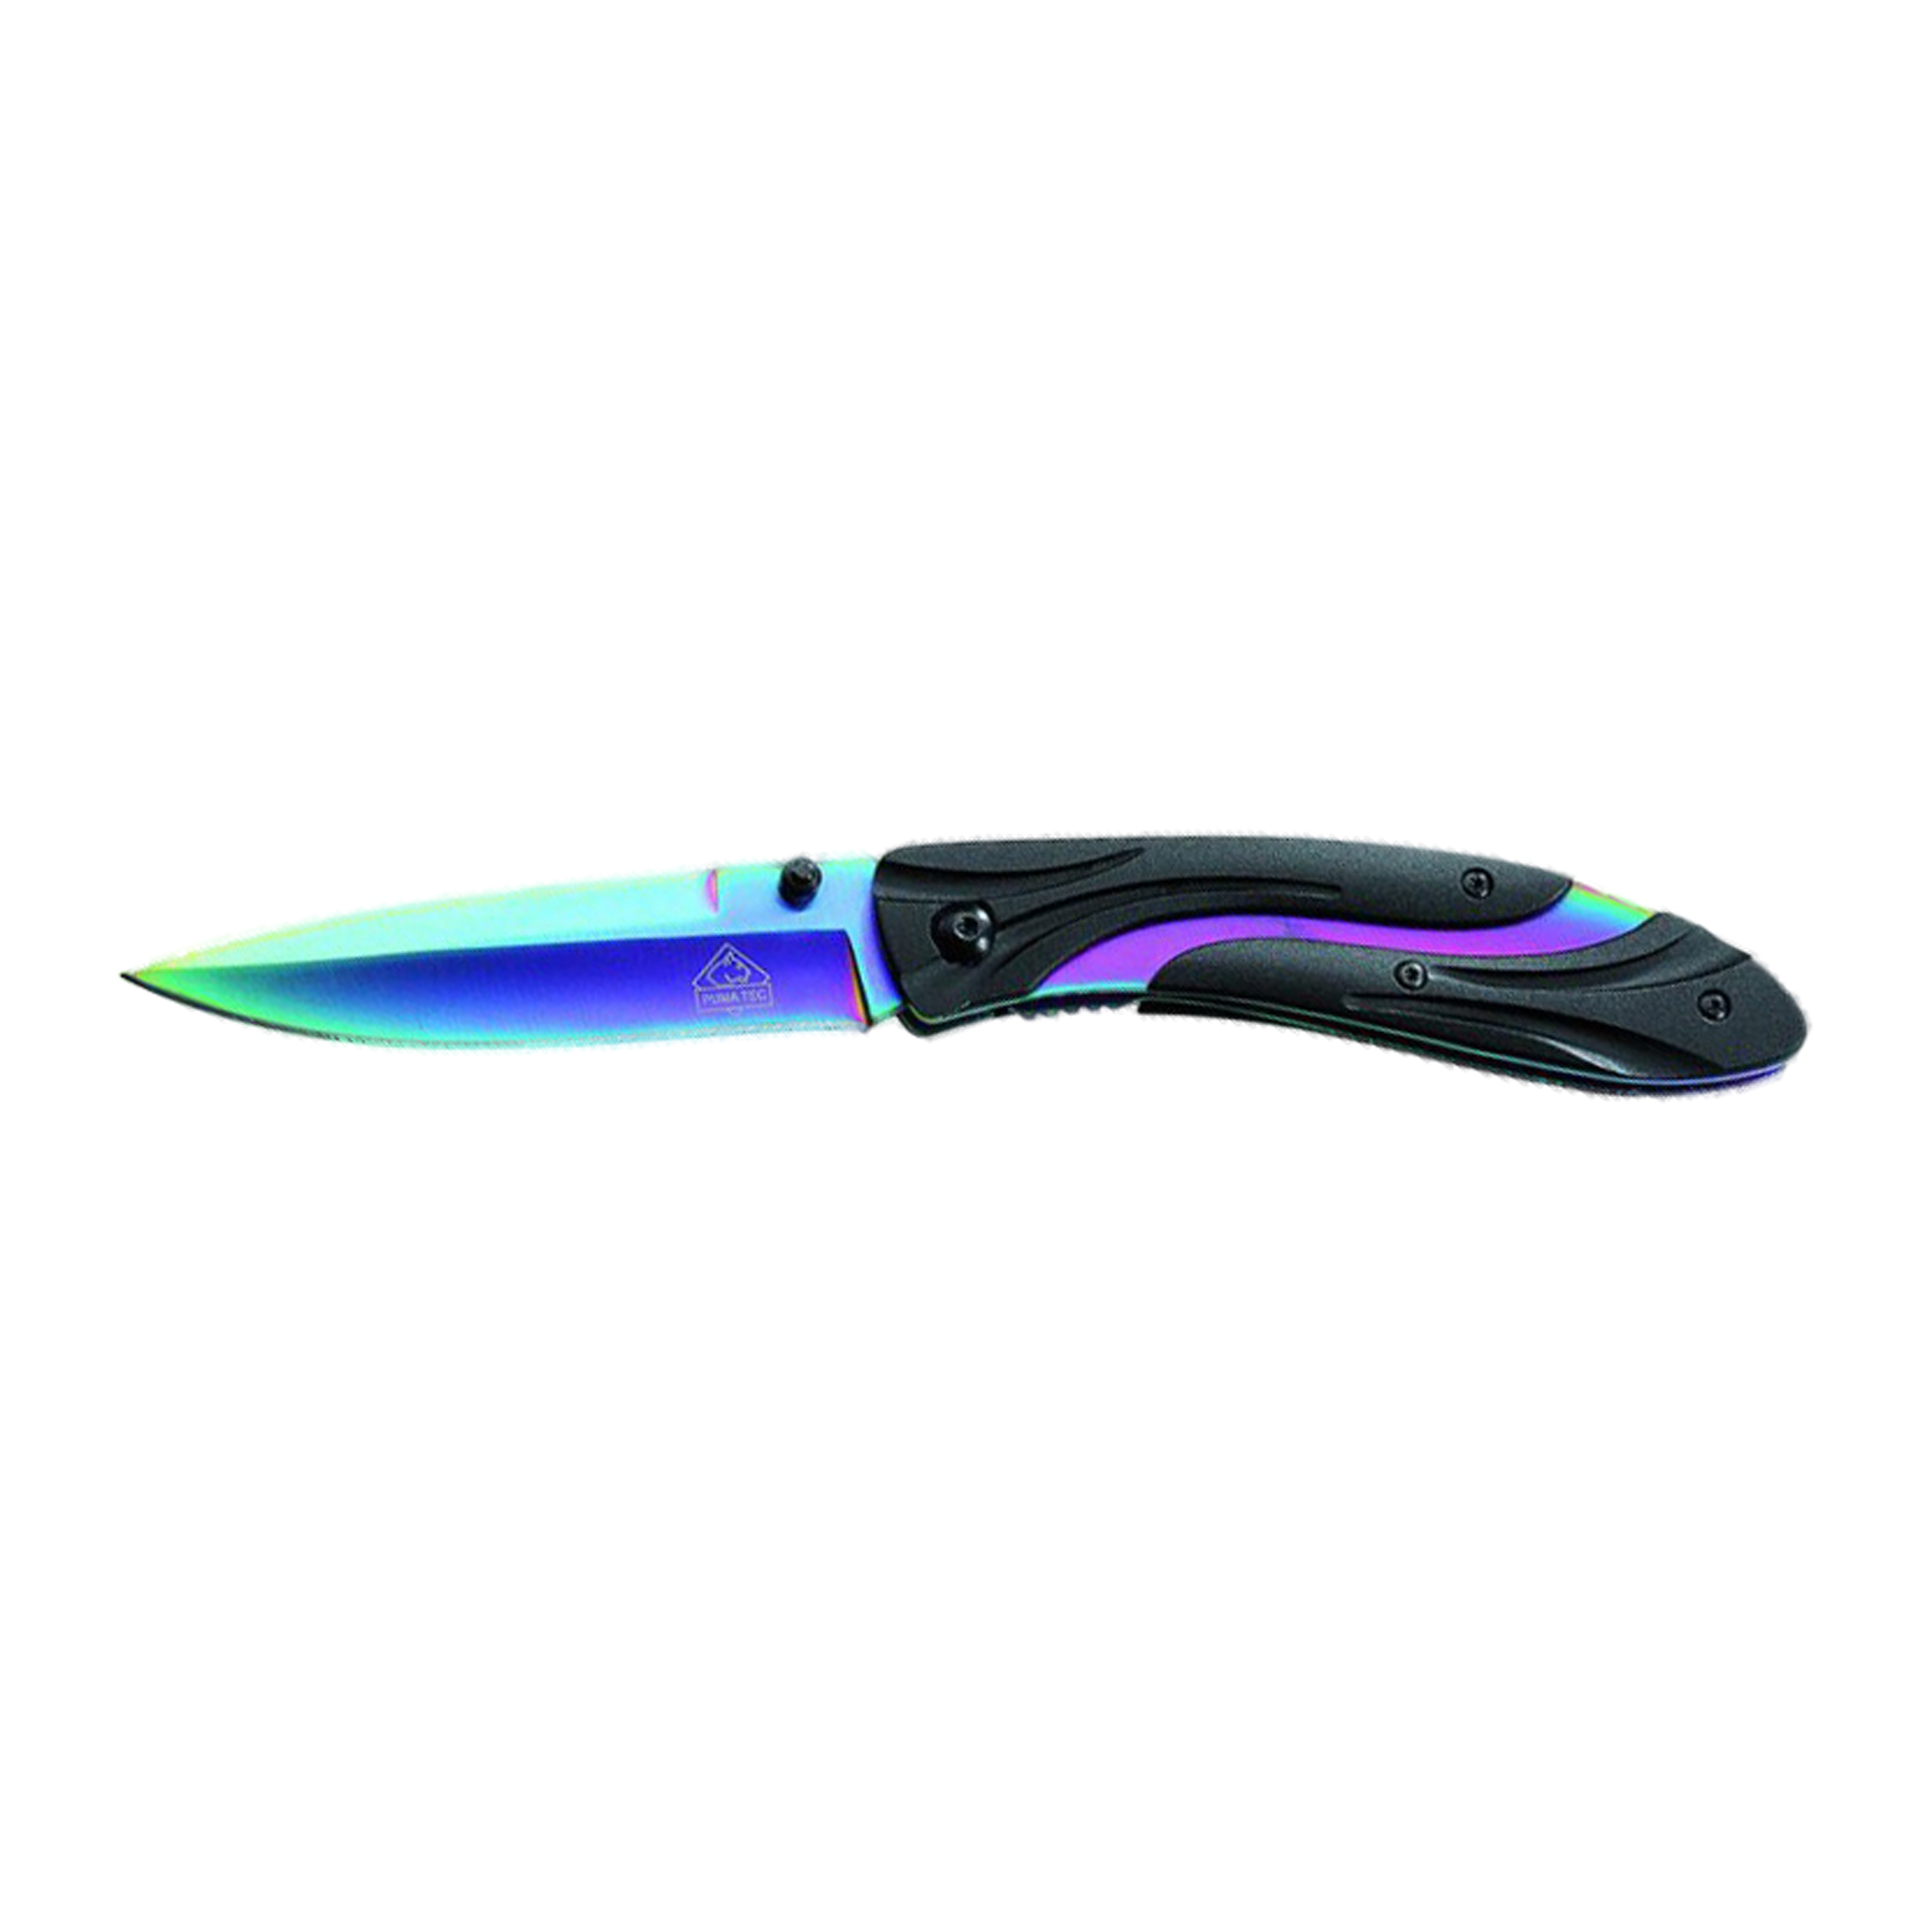 Purchase the Puma TEC Pocket Knife 306911 by ASMC